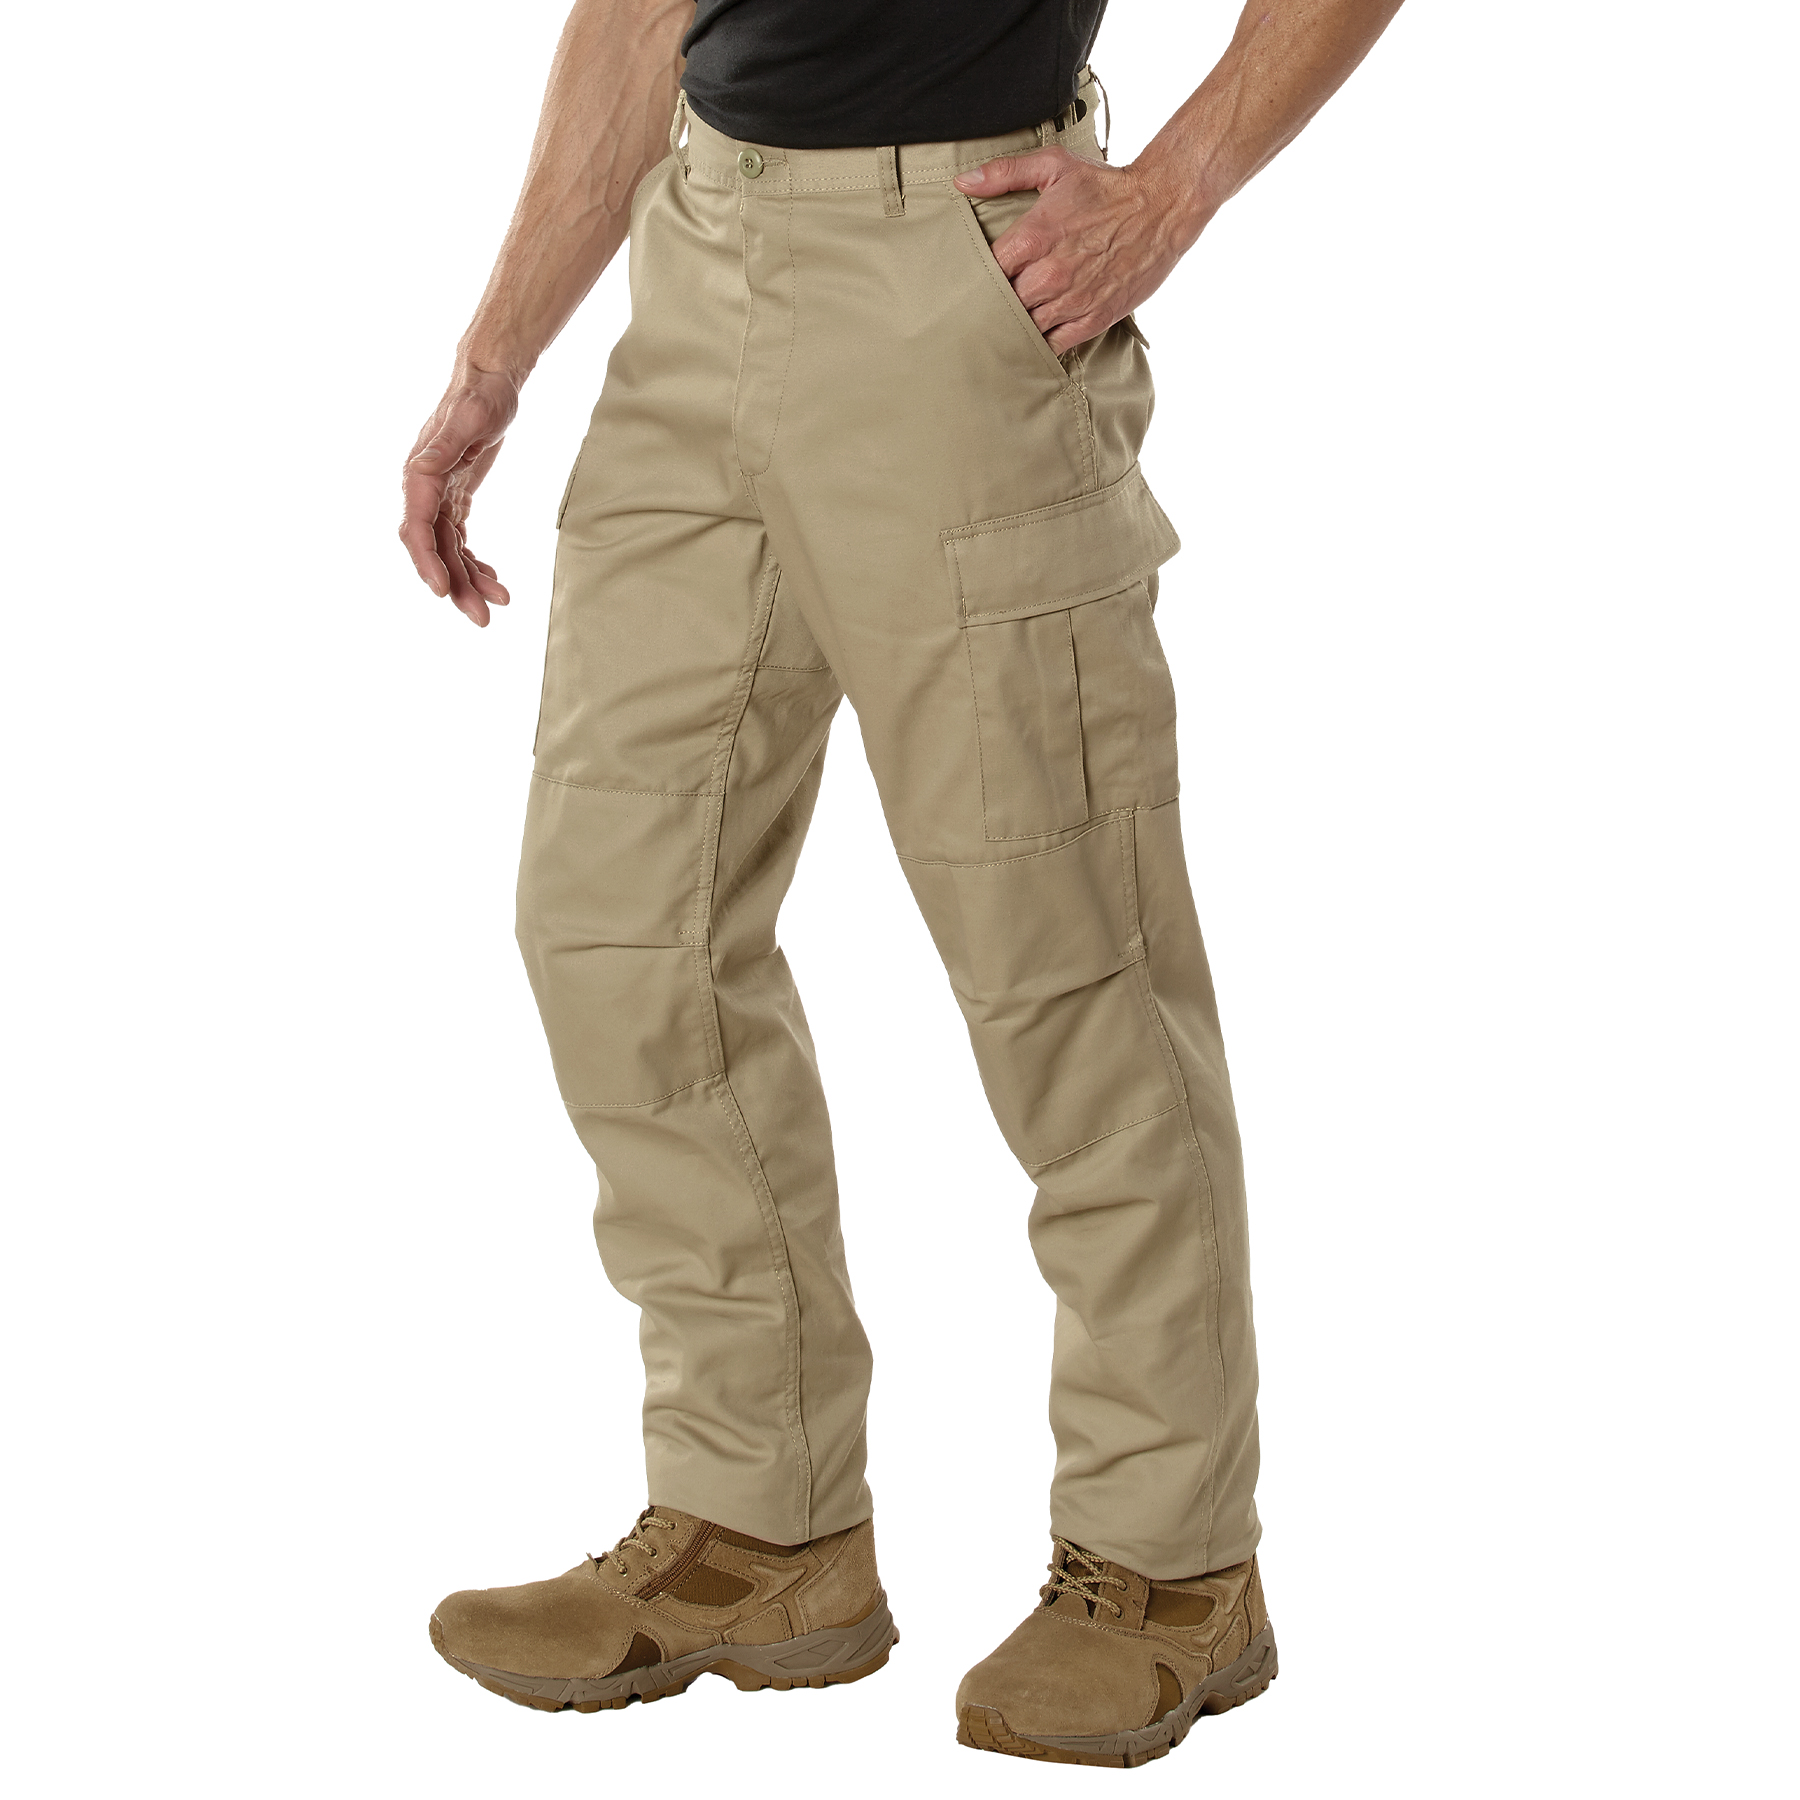 Rothco BDU Cargo Pants,Khaki,3XL - image 1 of 6